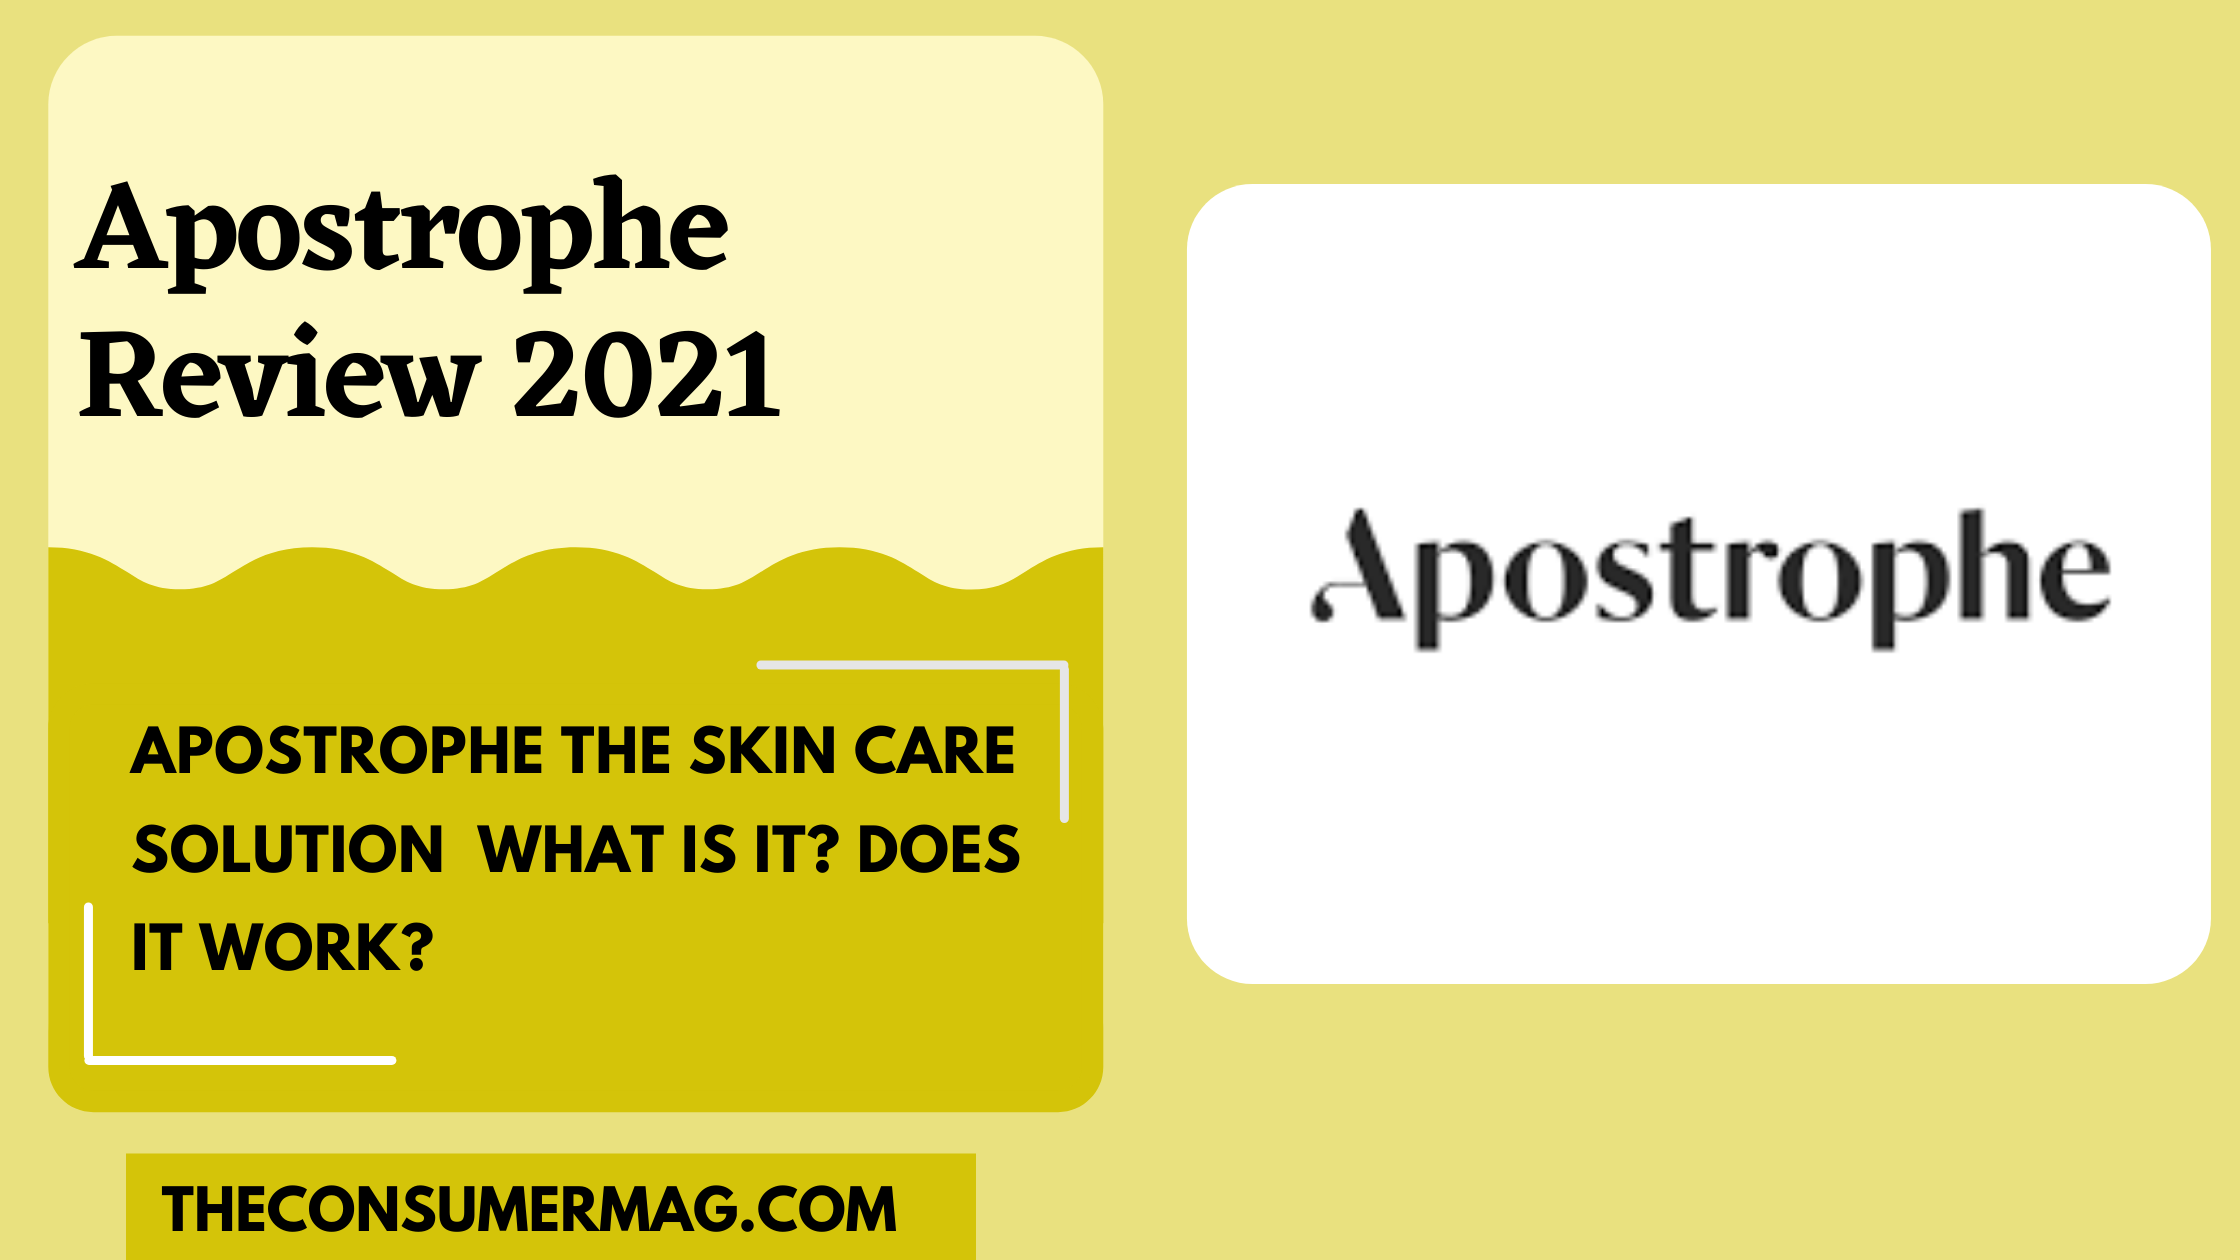 Apostrophe featured image